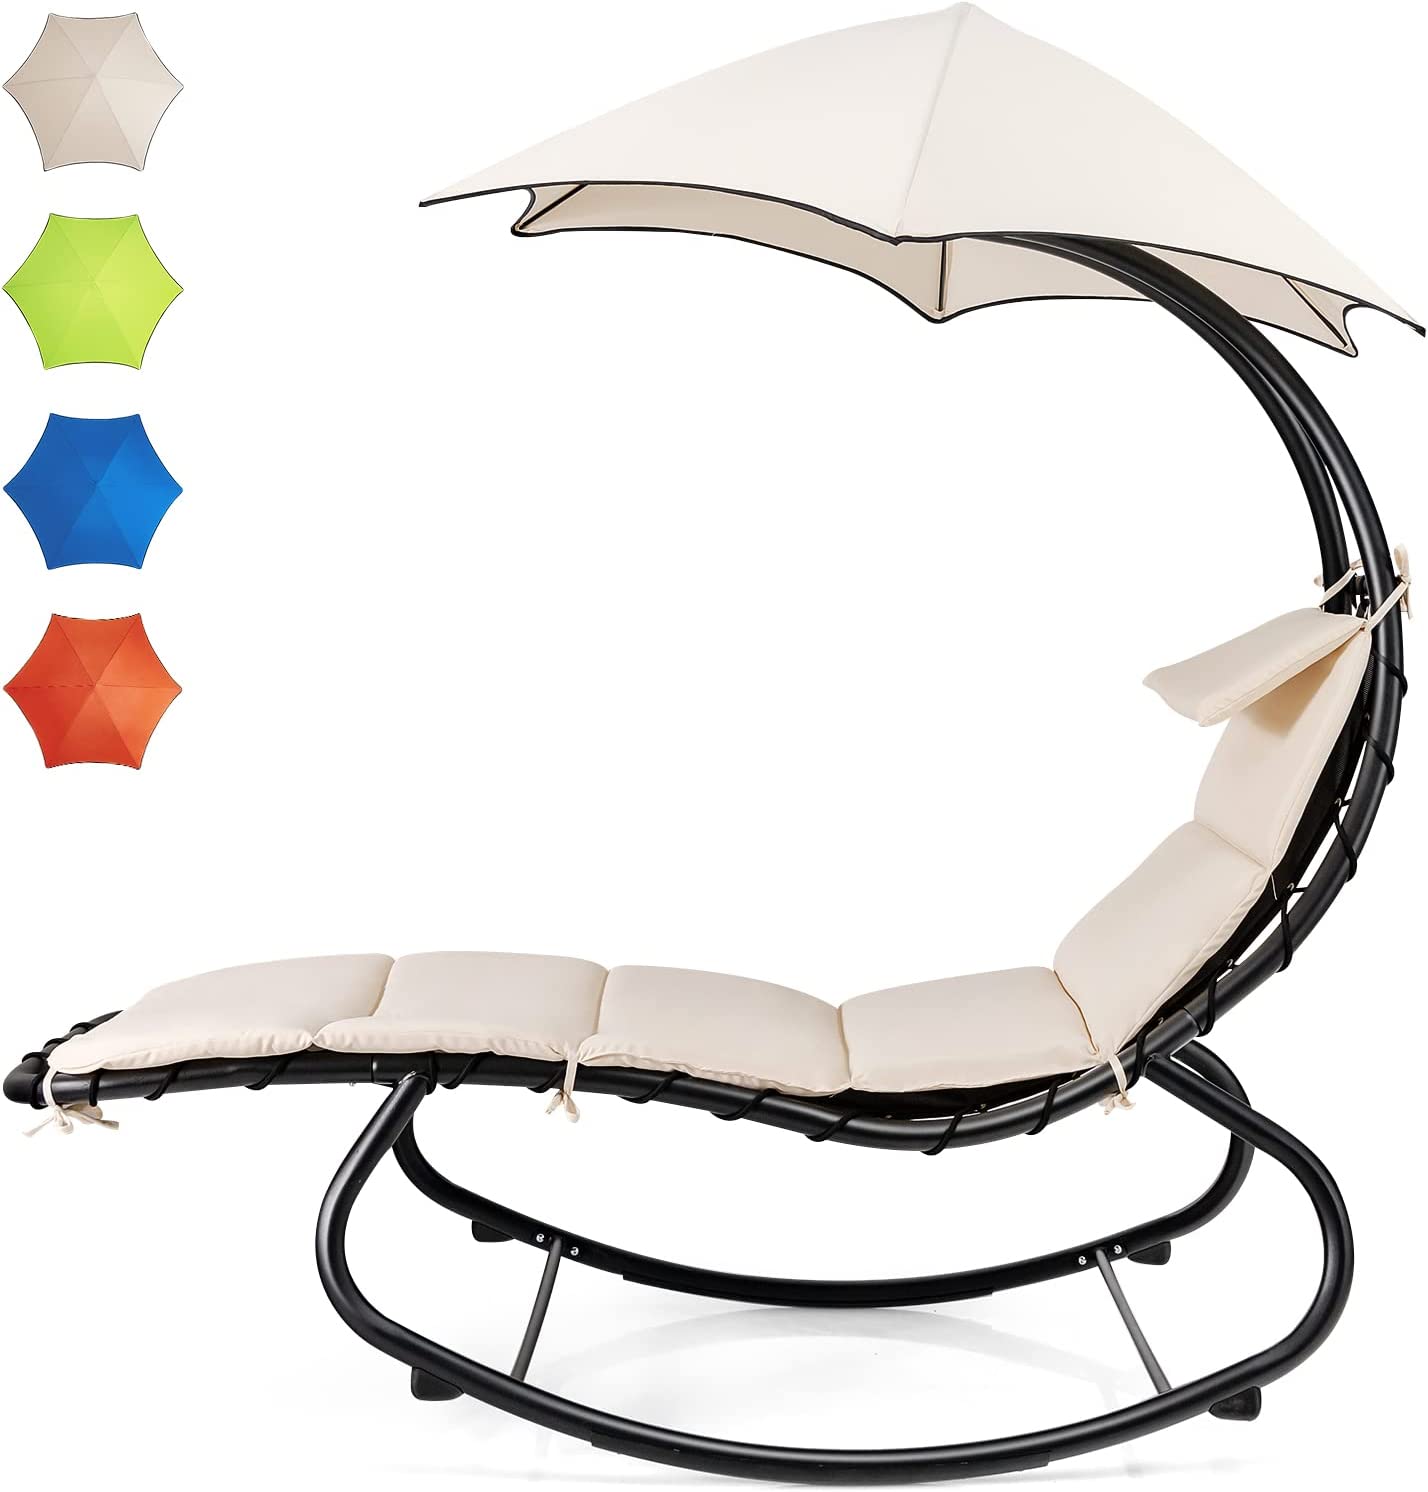 Giantex Hammock Chair Swing Lounger